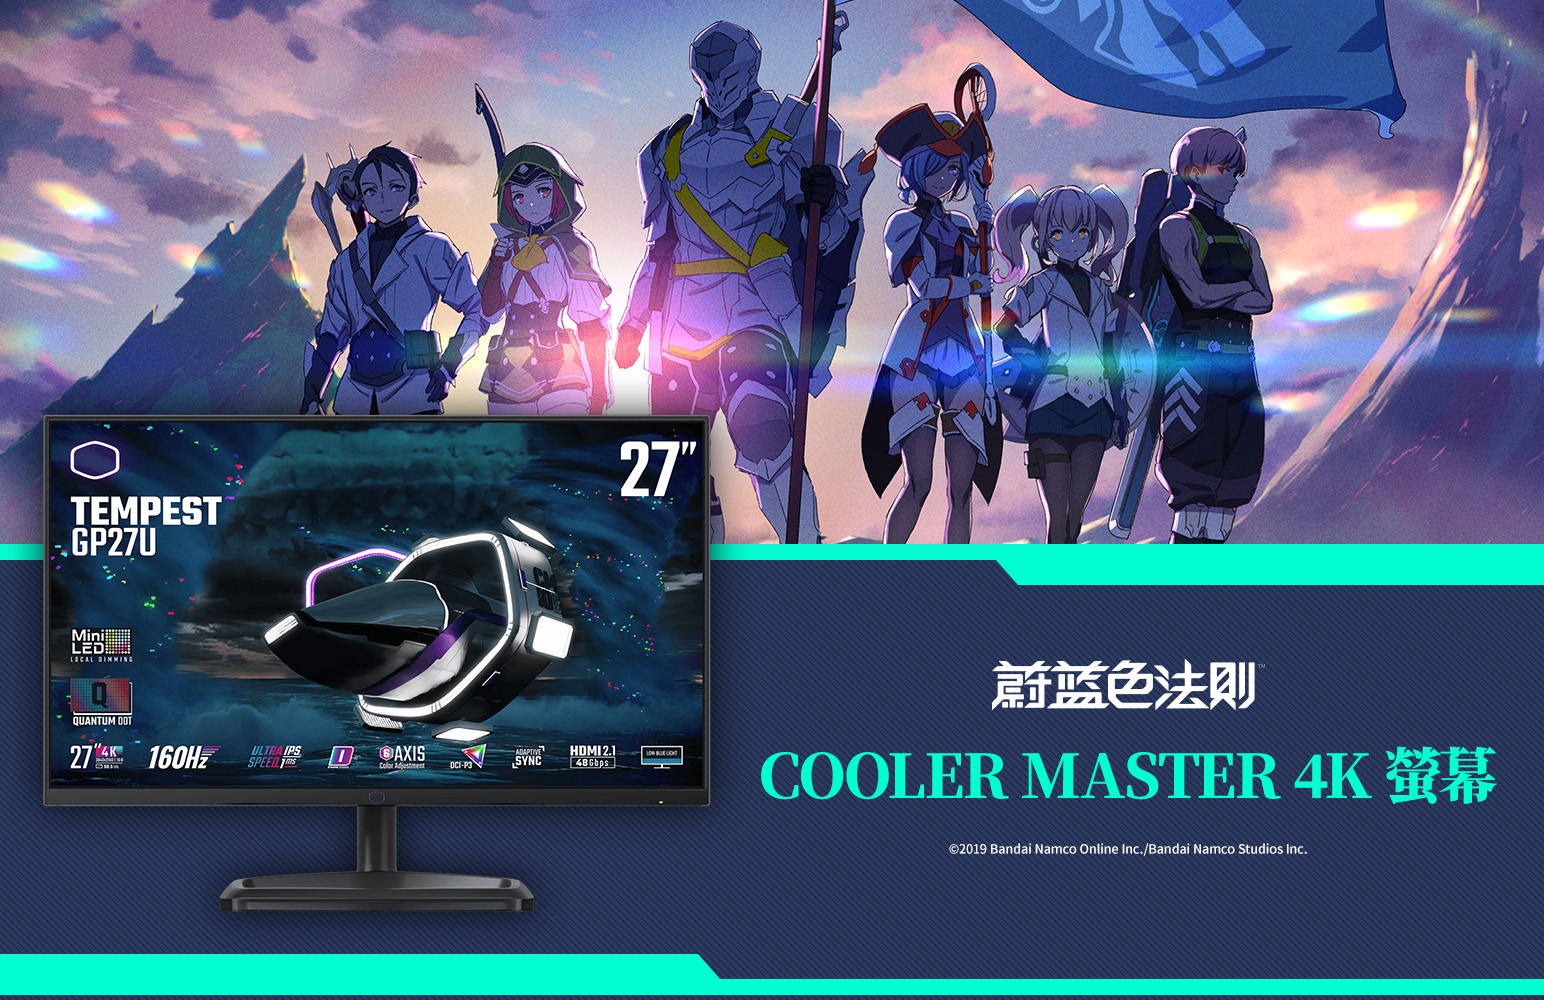 4.CoolerMaster螢幕